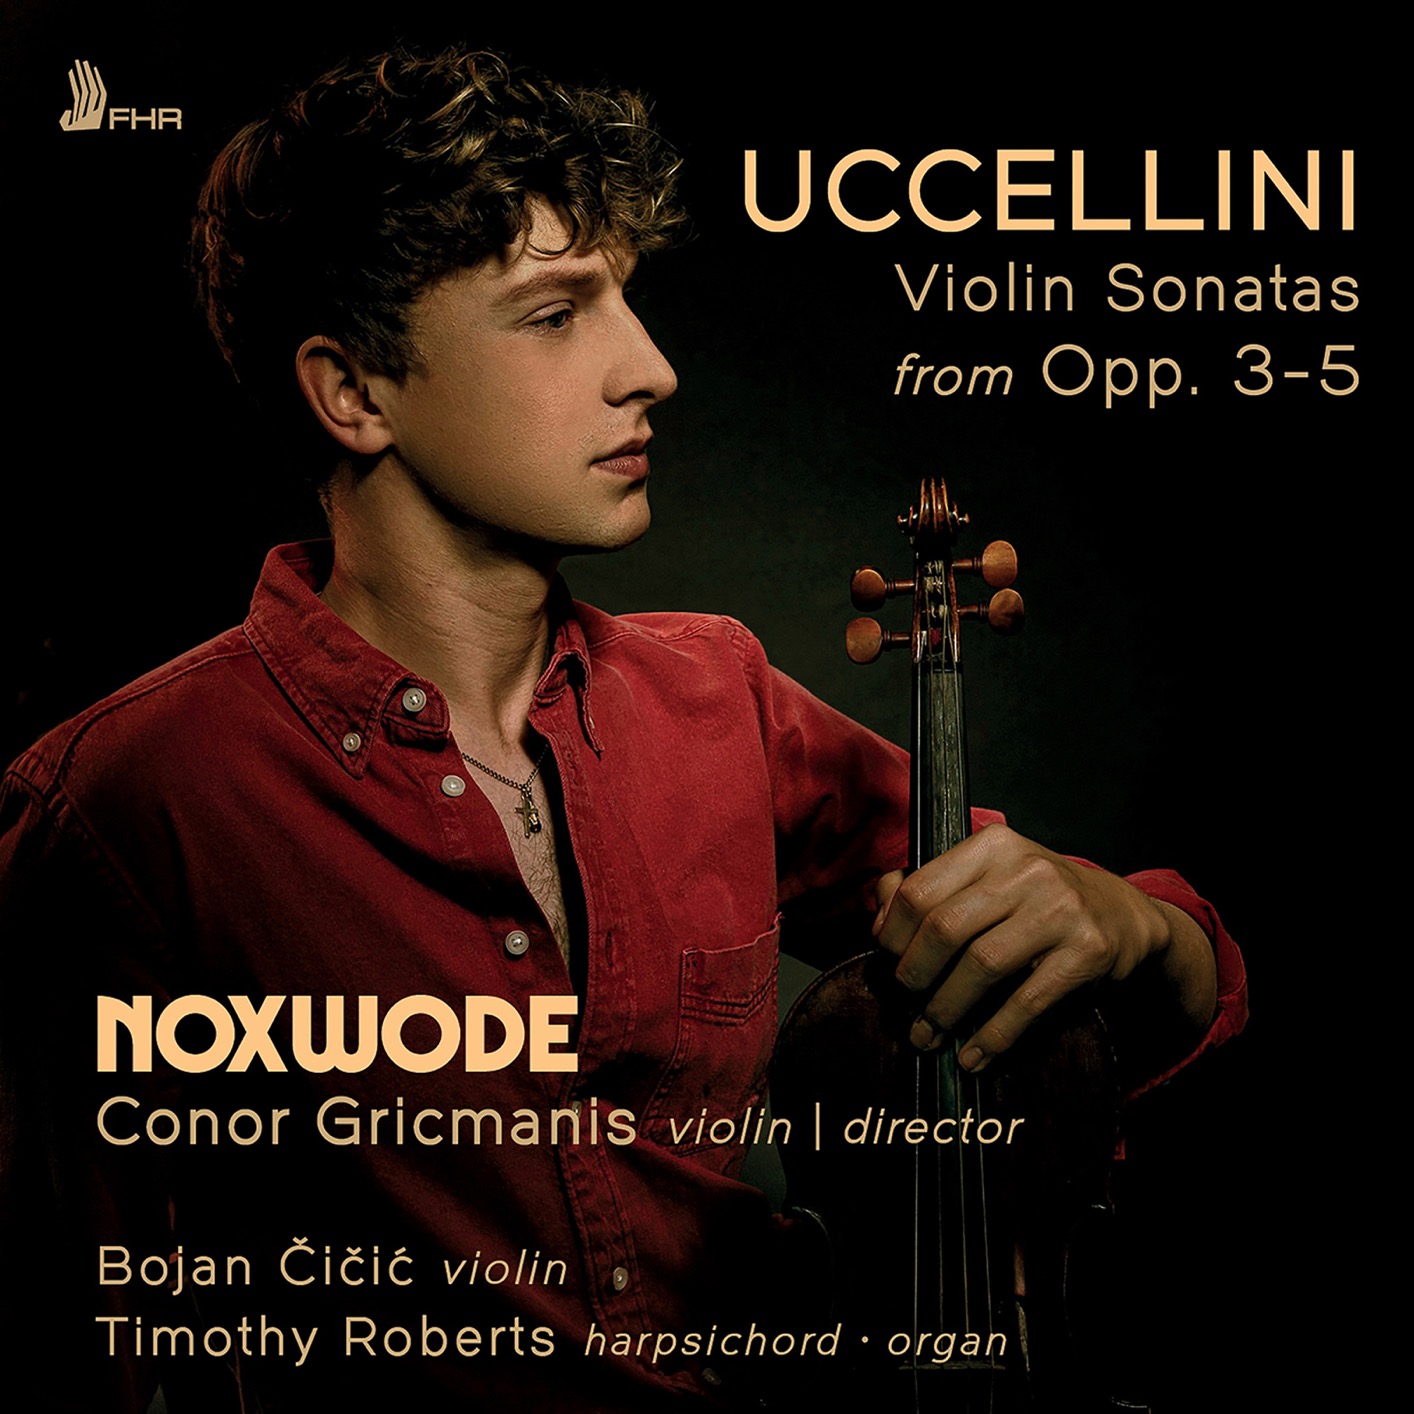 Uccellini - Violin Sonatas from Opp. 3-5, ca. 1642 - Noxwode, Conor Gricmanis